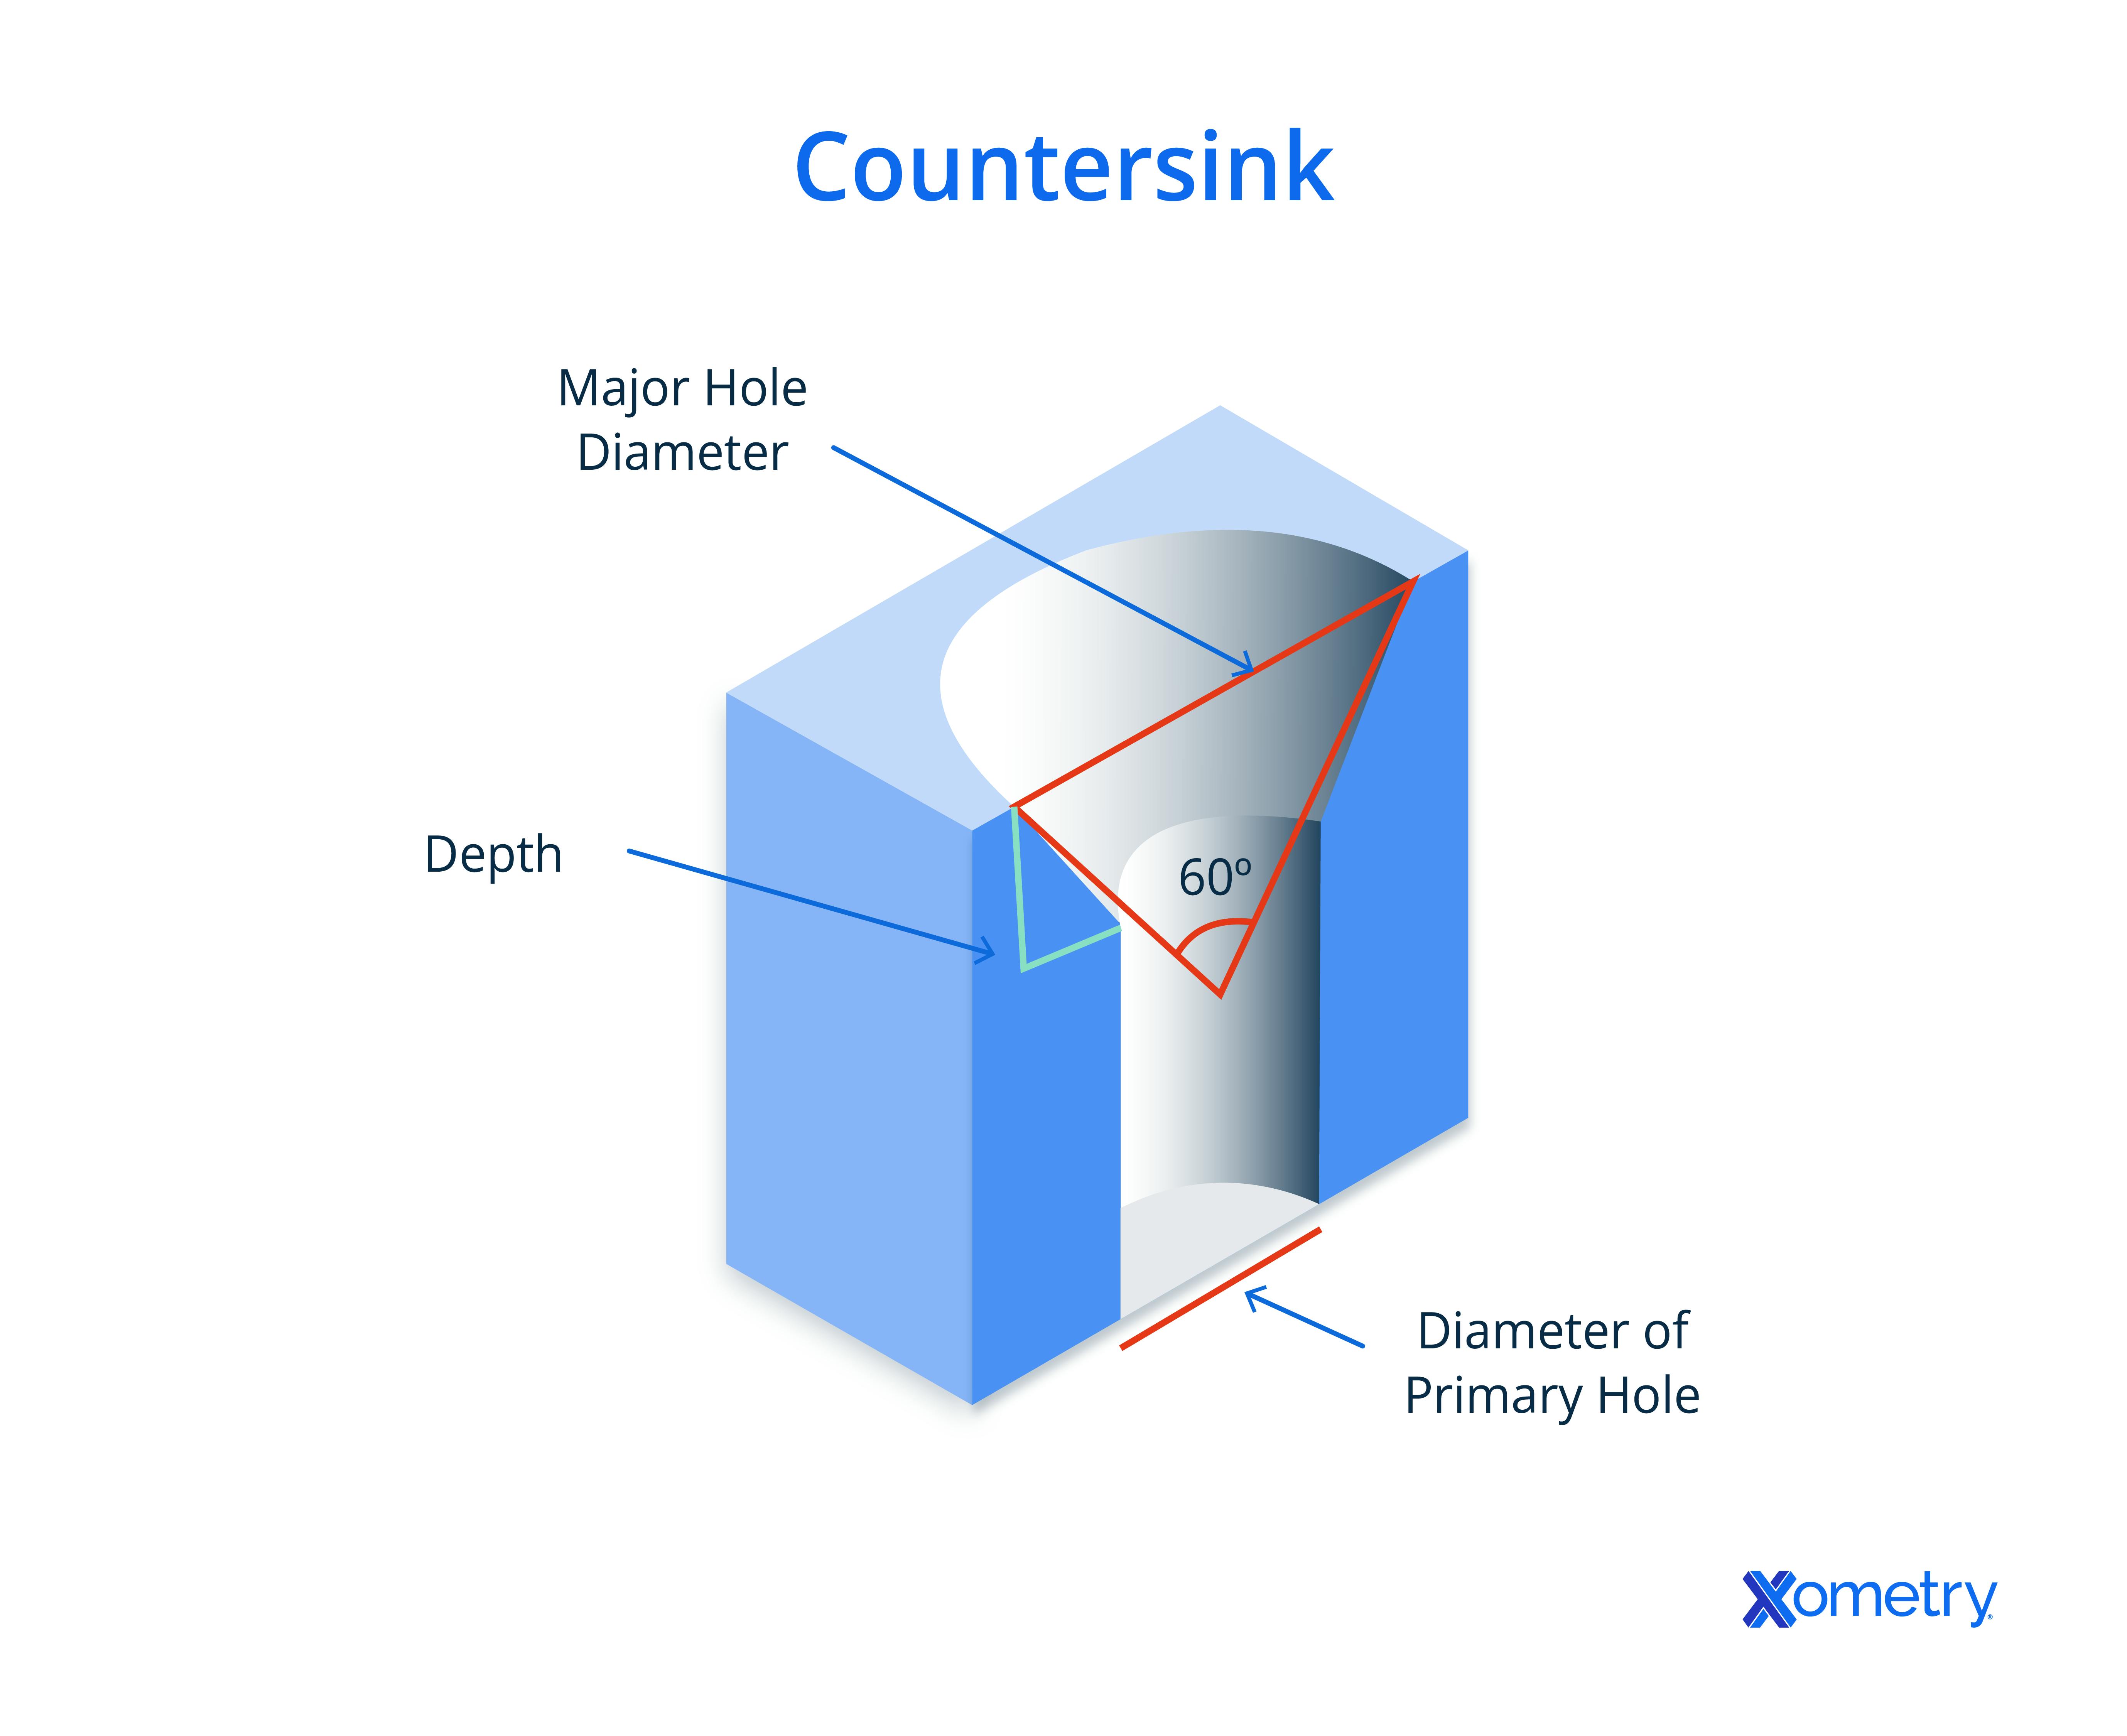 A countersink hole